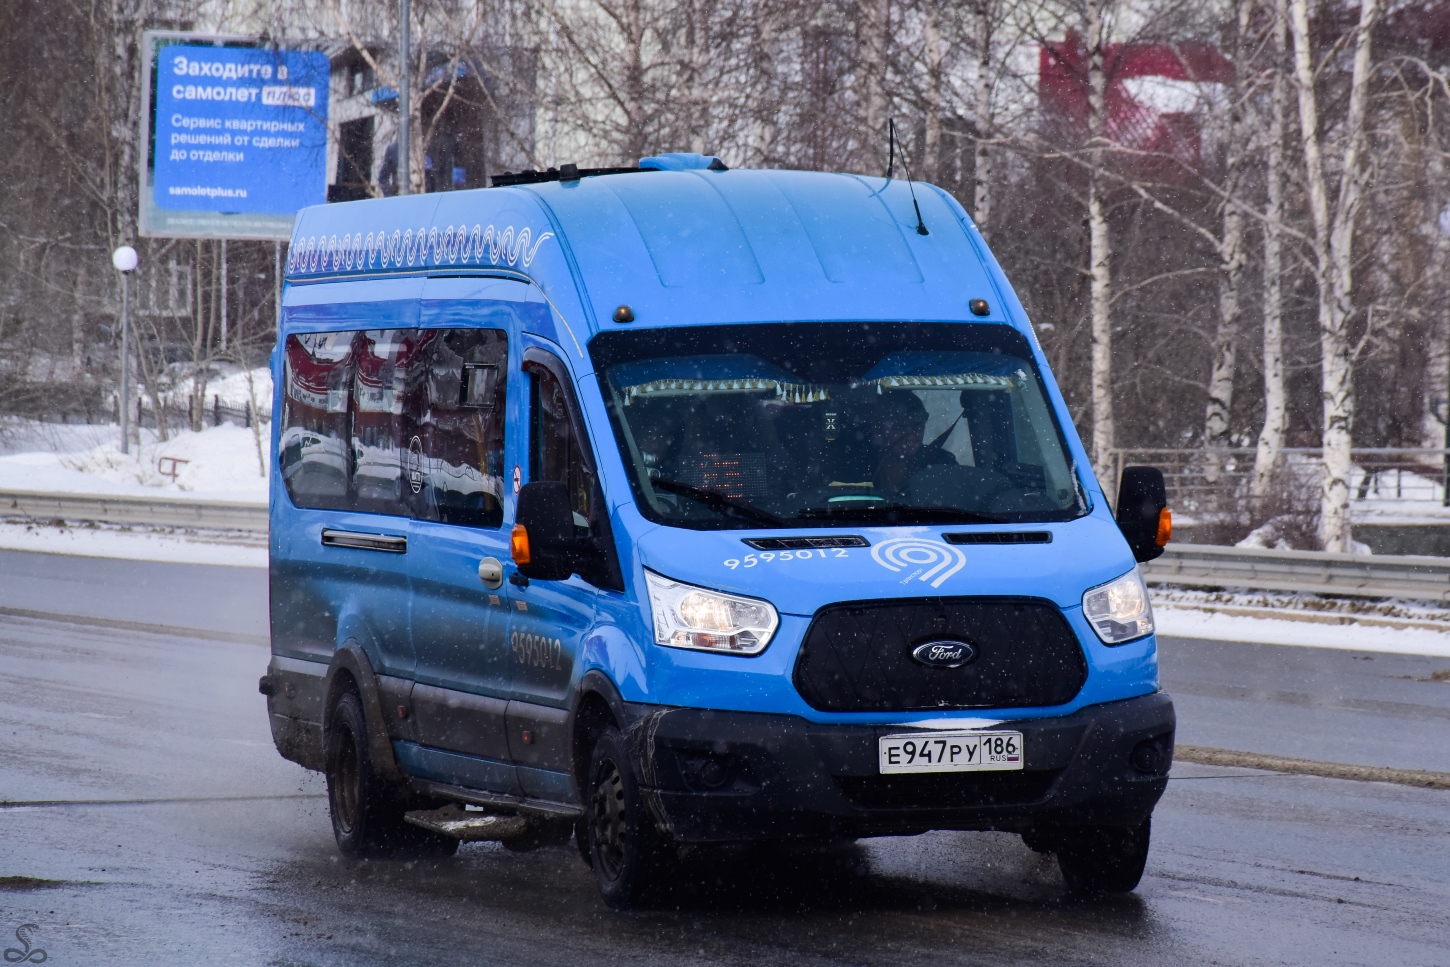 Khanty-Mansiysk, Ford Transit 136T460 FBD [RUS] №: Е 947 РУ 186